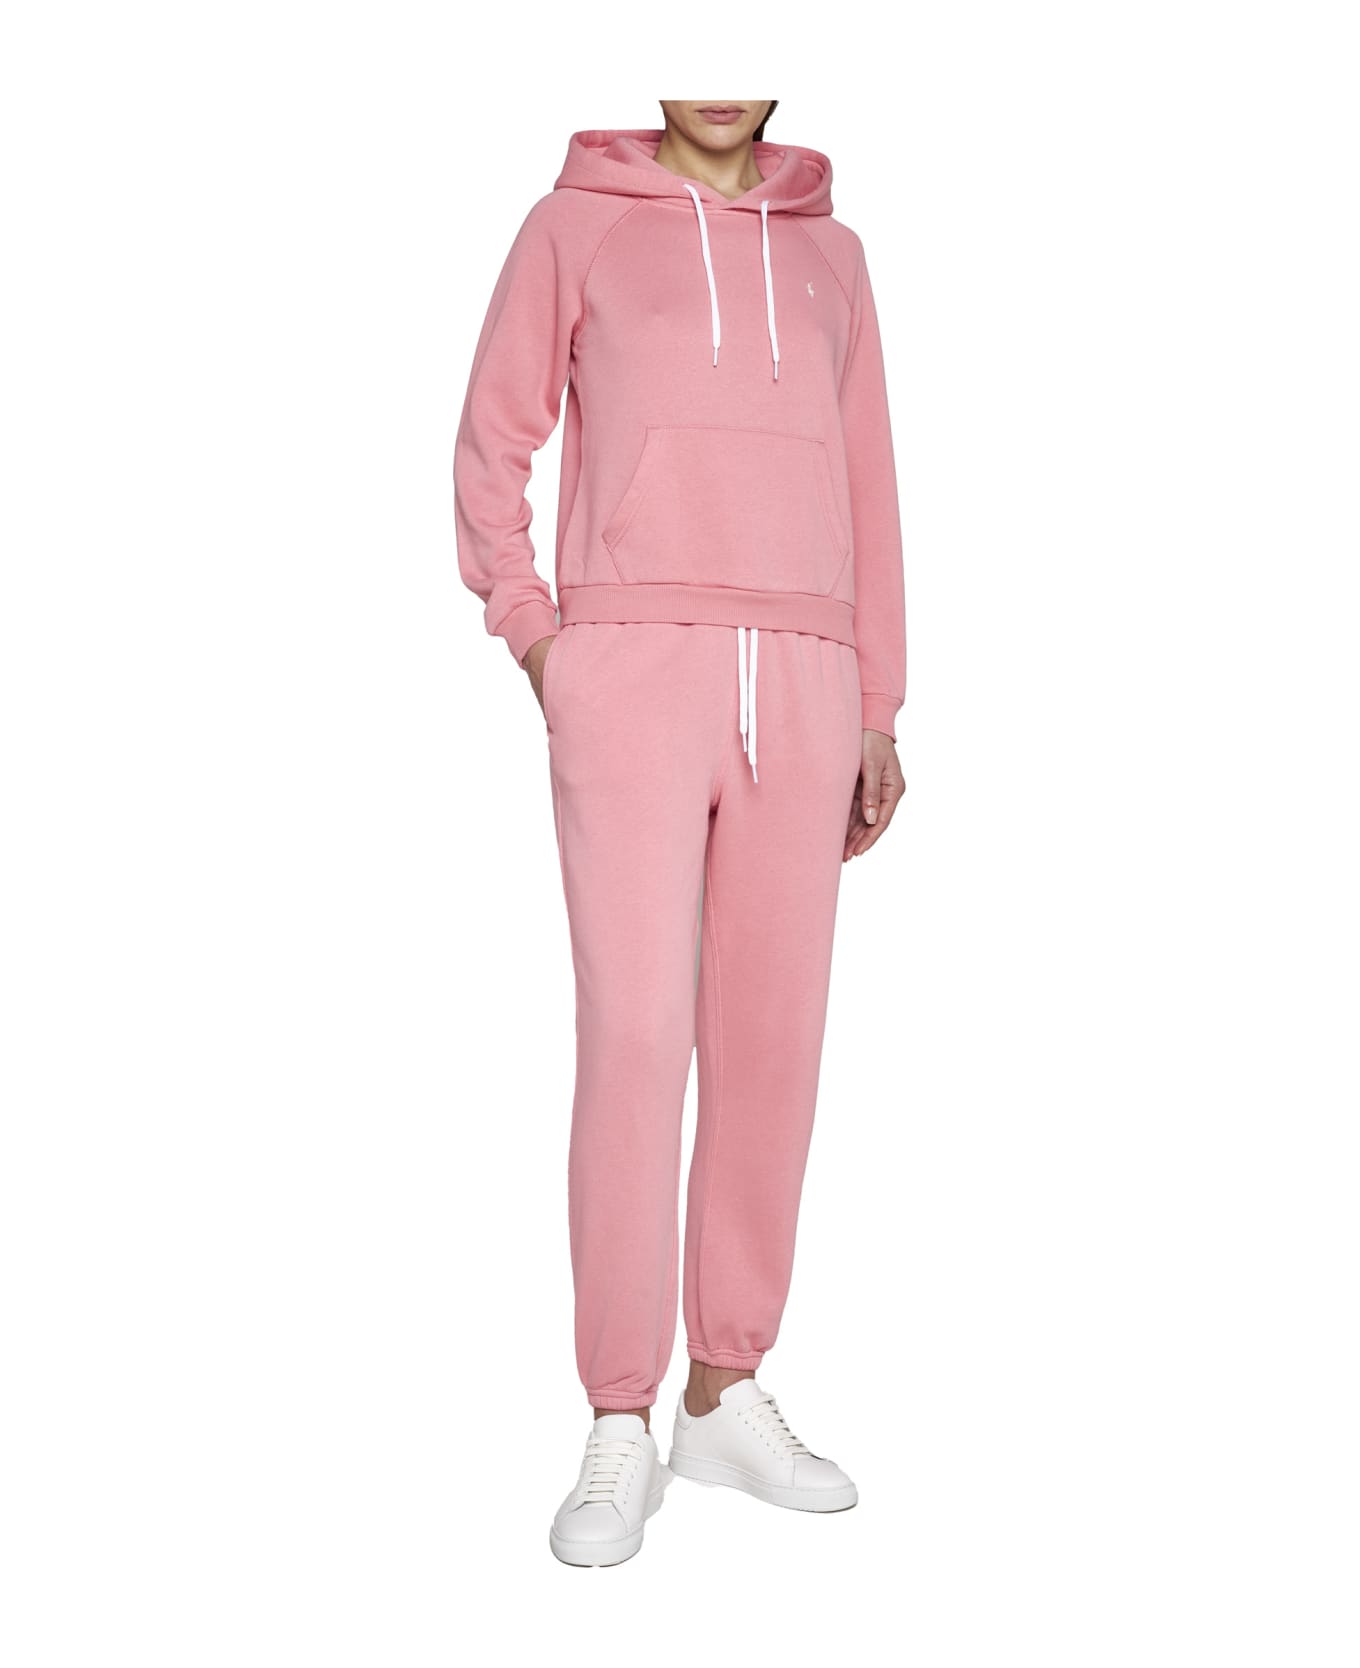 Polo Ralph Lauren Fleece - Dolce pink